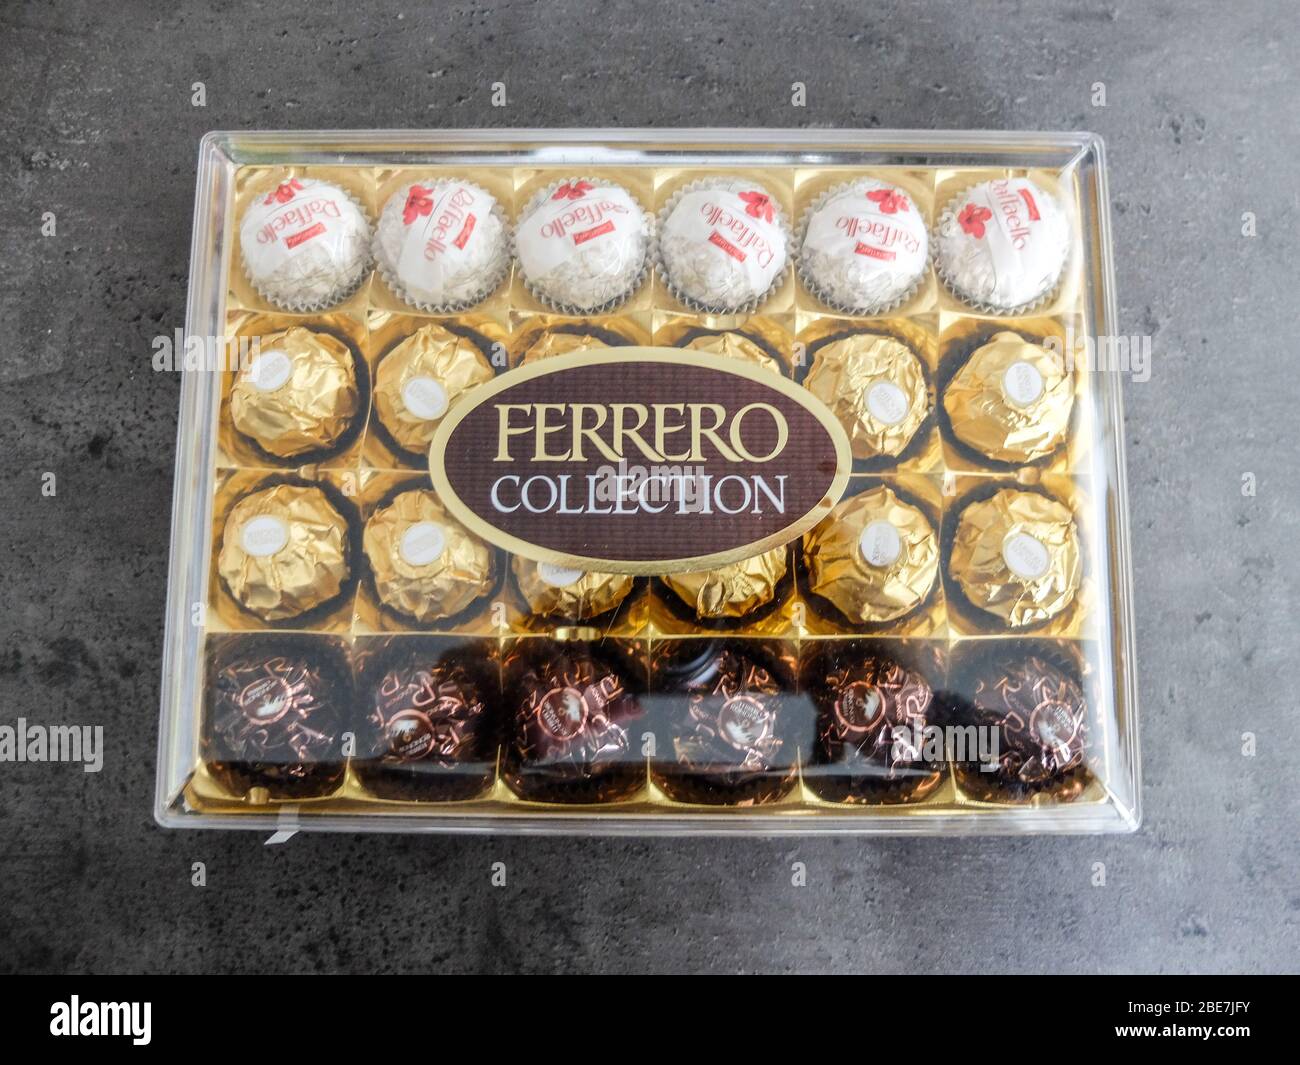 https://c8.alamy.com/comp/2BE7JFY/ferrero-chocolate-pralines-collection-box-with-raffaello-ferrero-rocher-and-rond-noirs-2BE7JFY.jpg